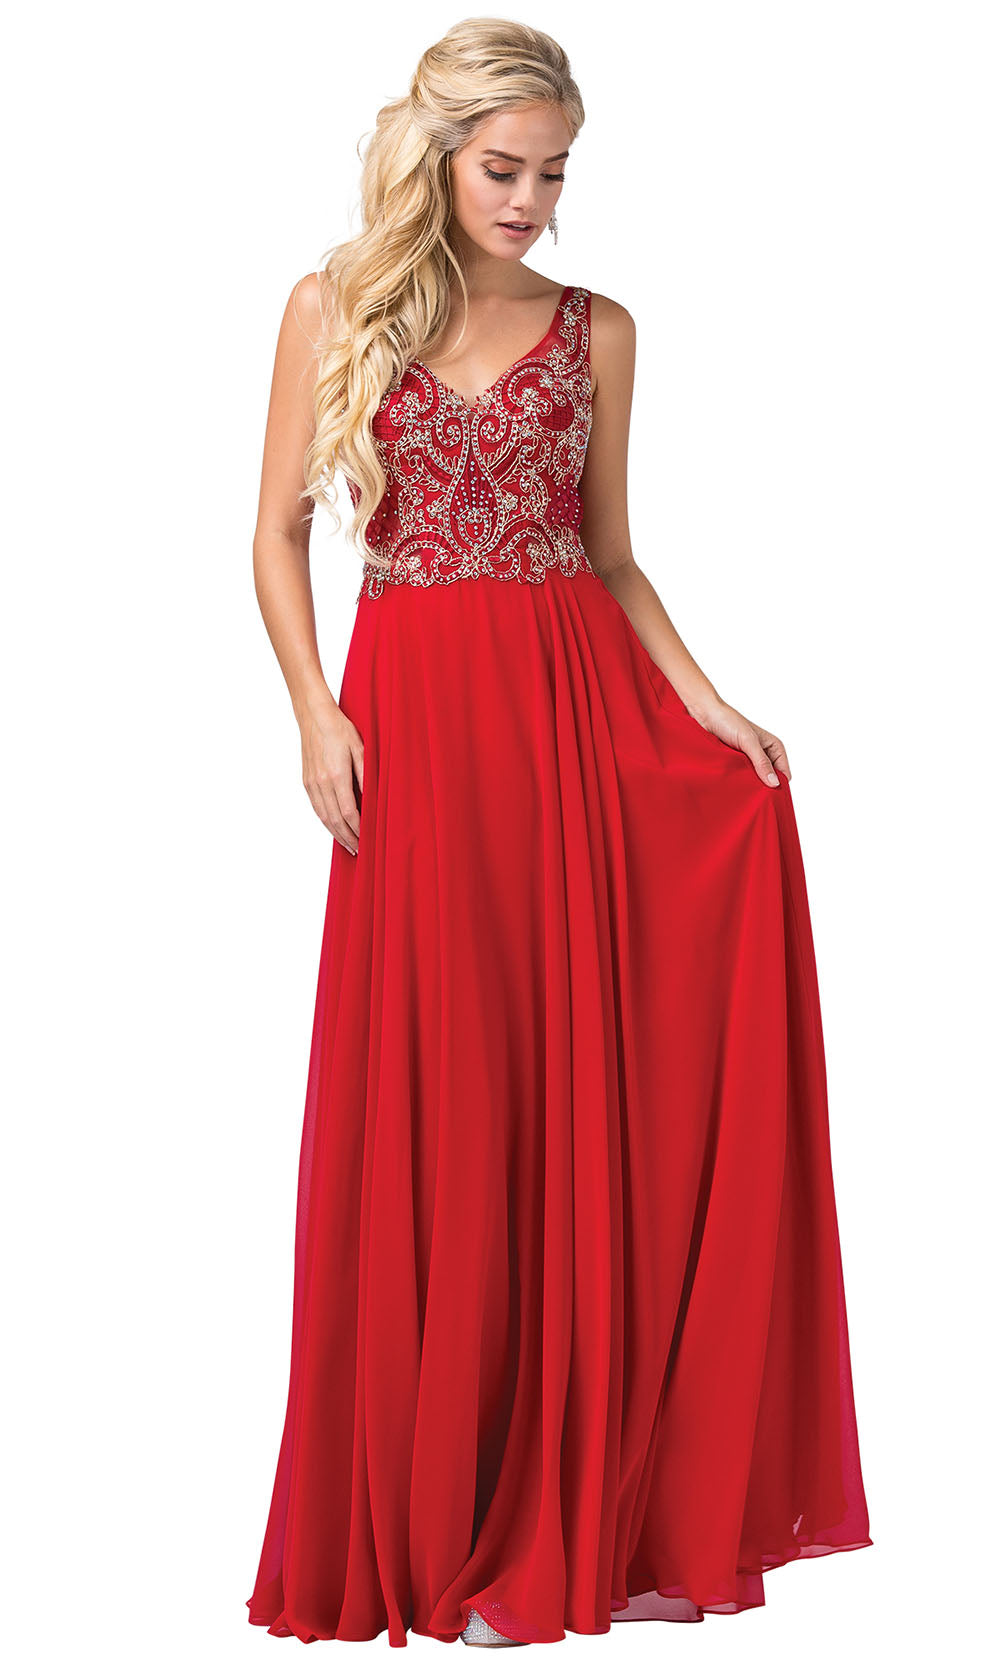 Dancing Queen - 2647 Jeweled Applique A-Line Dress In Red